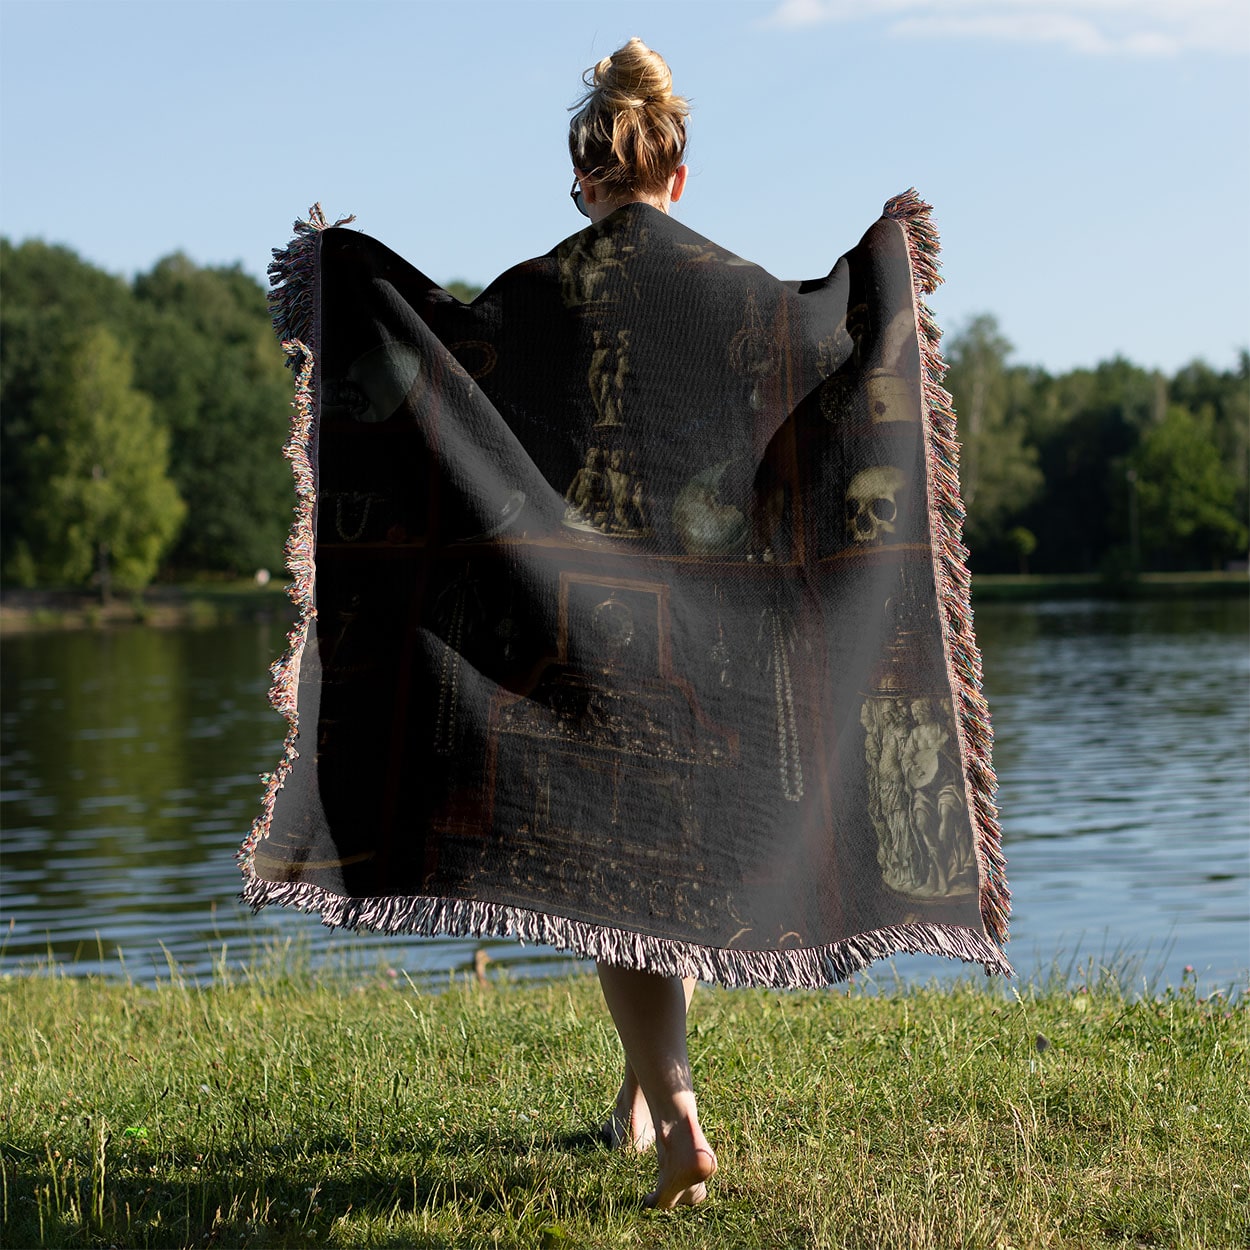 Dark Academia Aesthetic Woven Blanket Held on a Woman's Back Outside